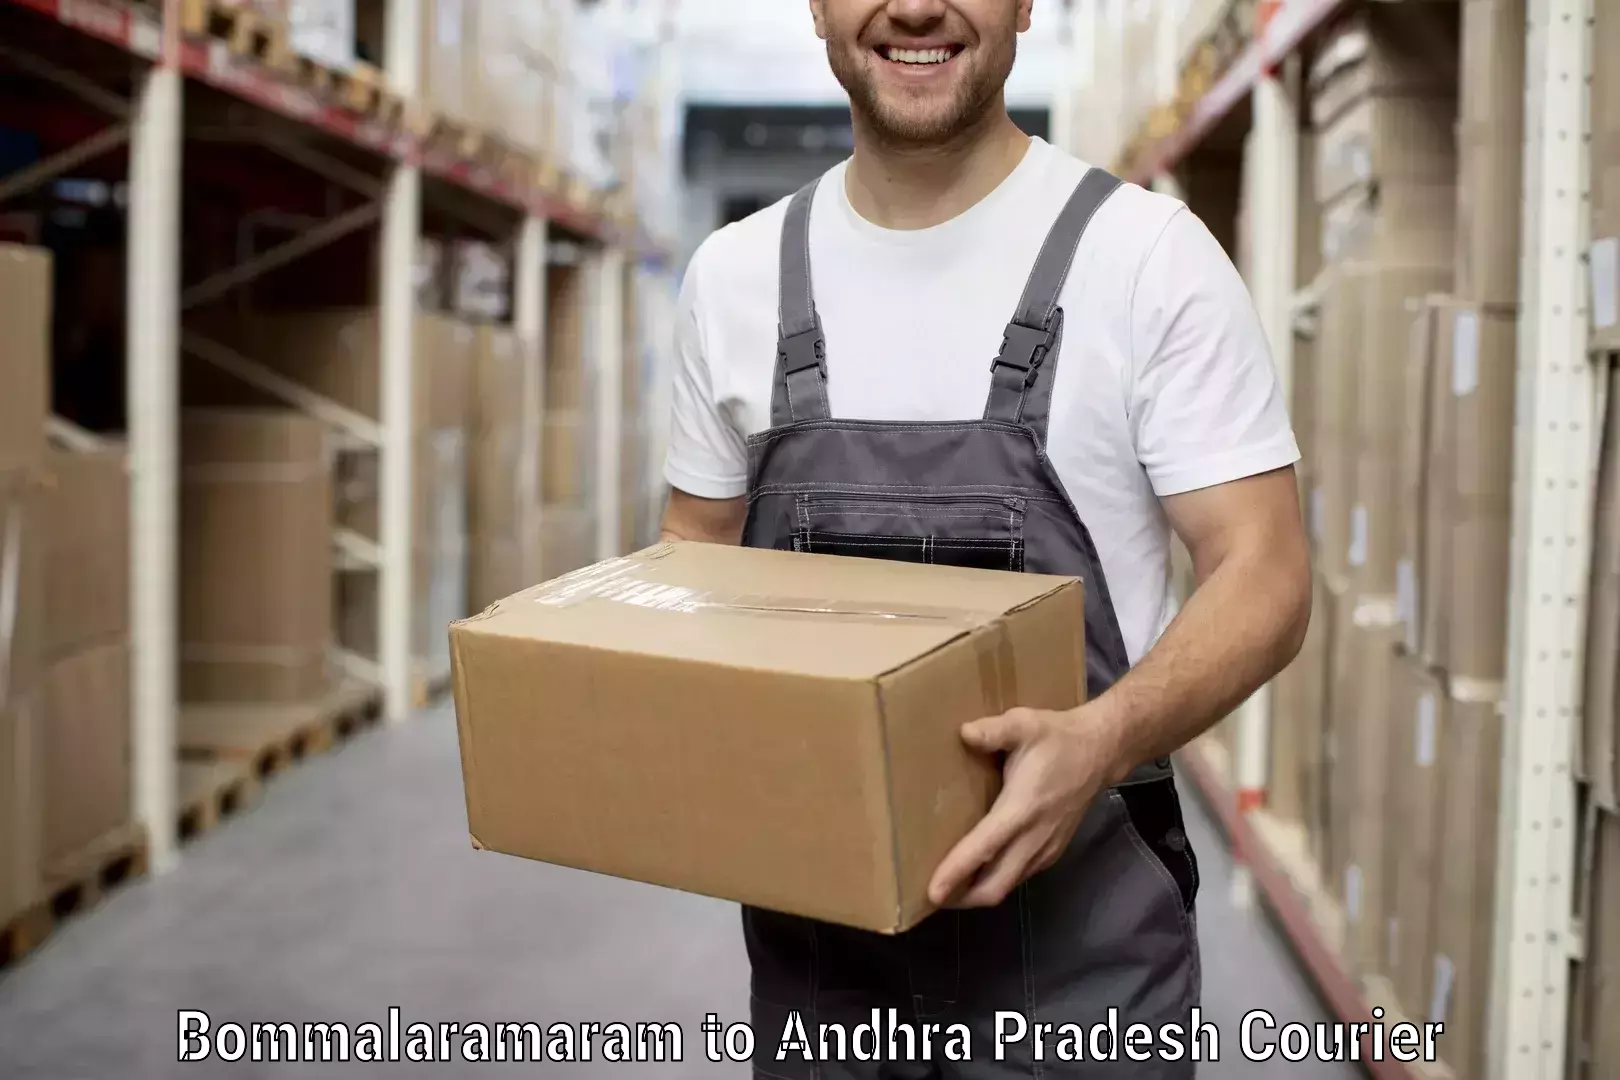 Furniture delivery service Bommalaramaram to IIIT Chittoor